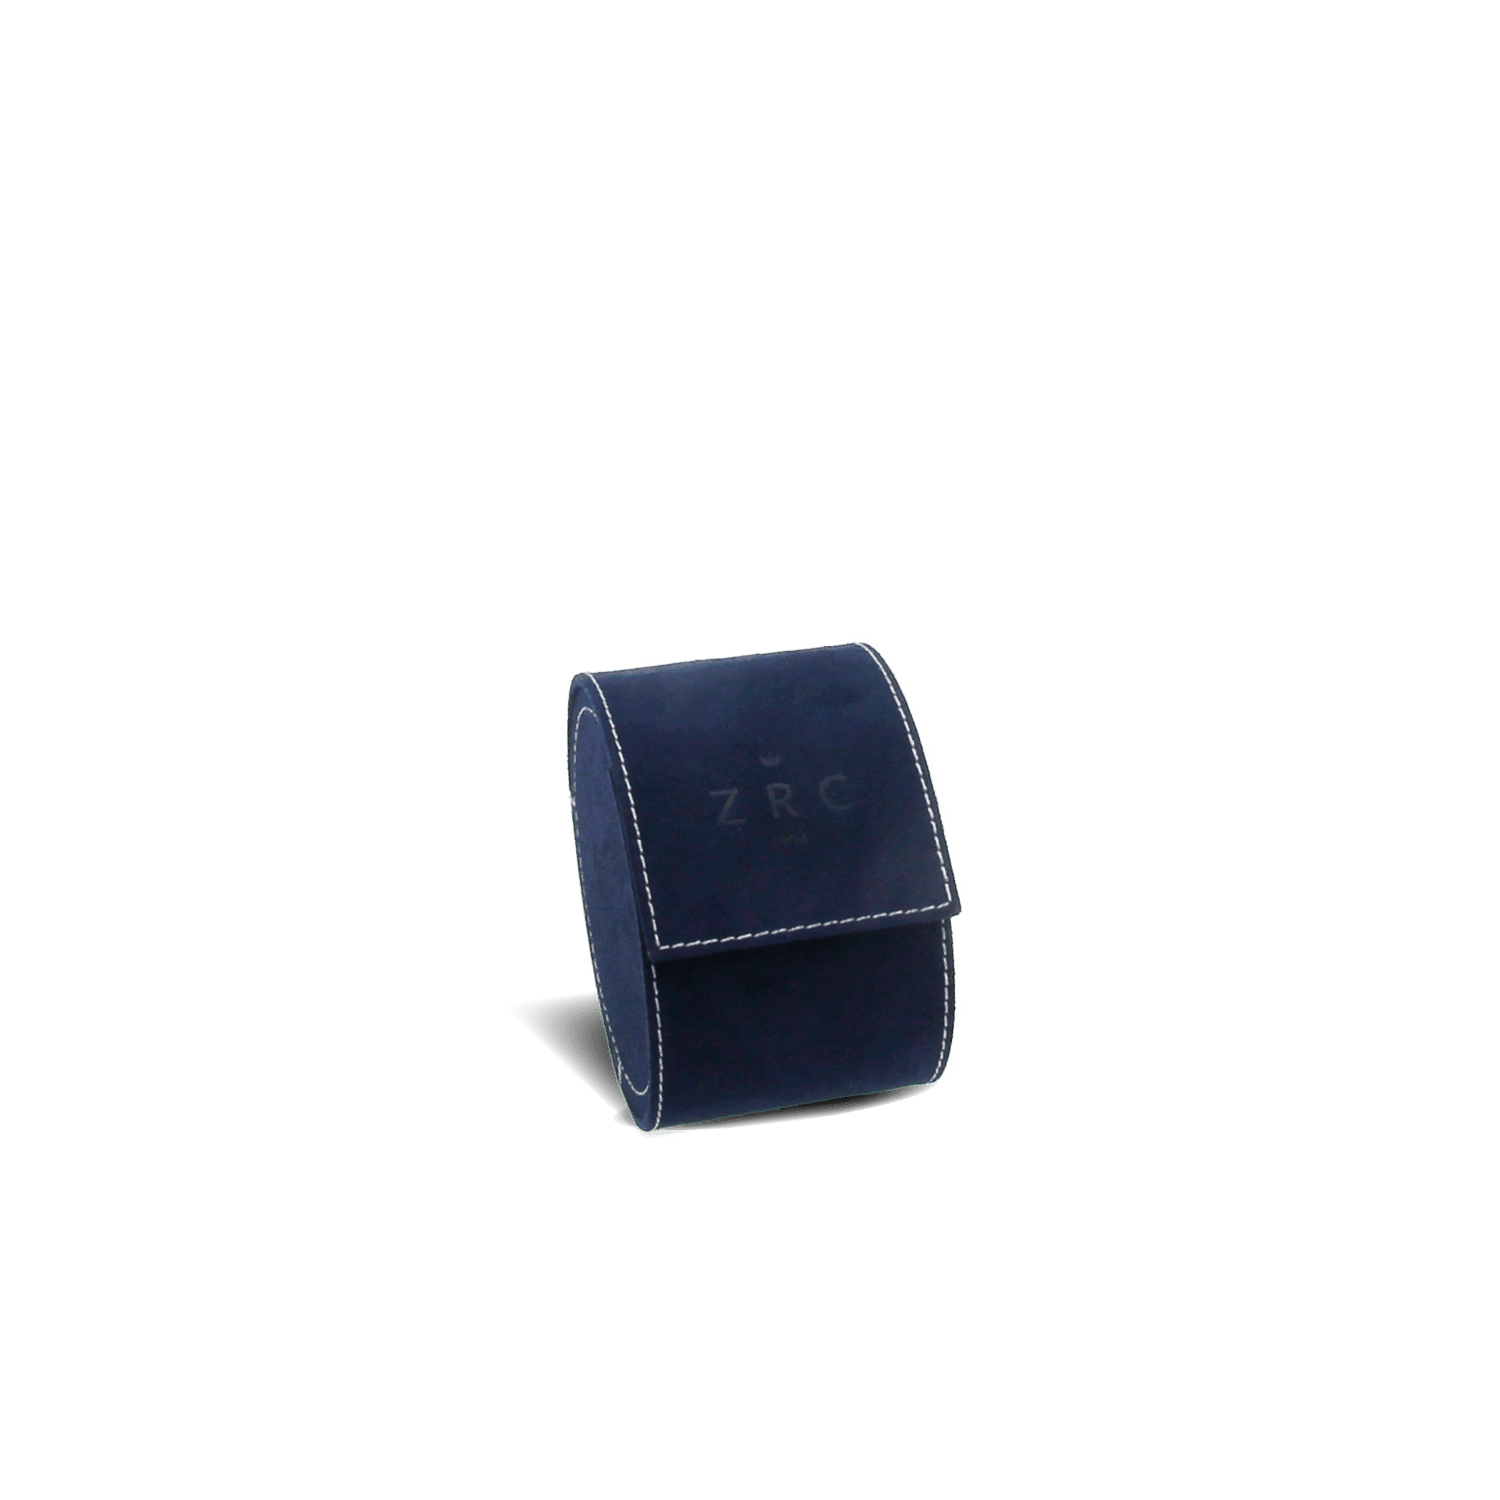 ZRC®-1-Watch-Alcantara-Box-cloded